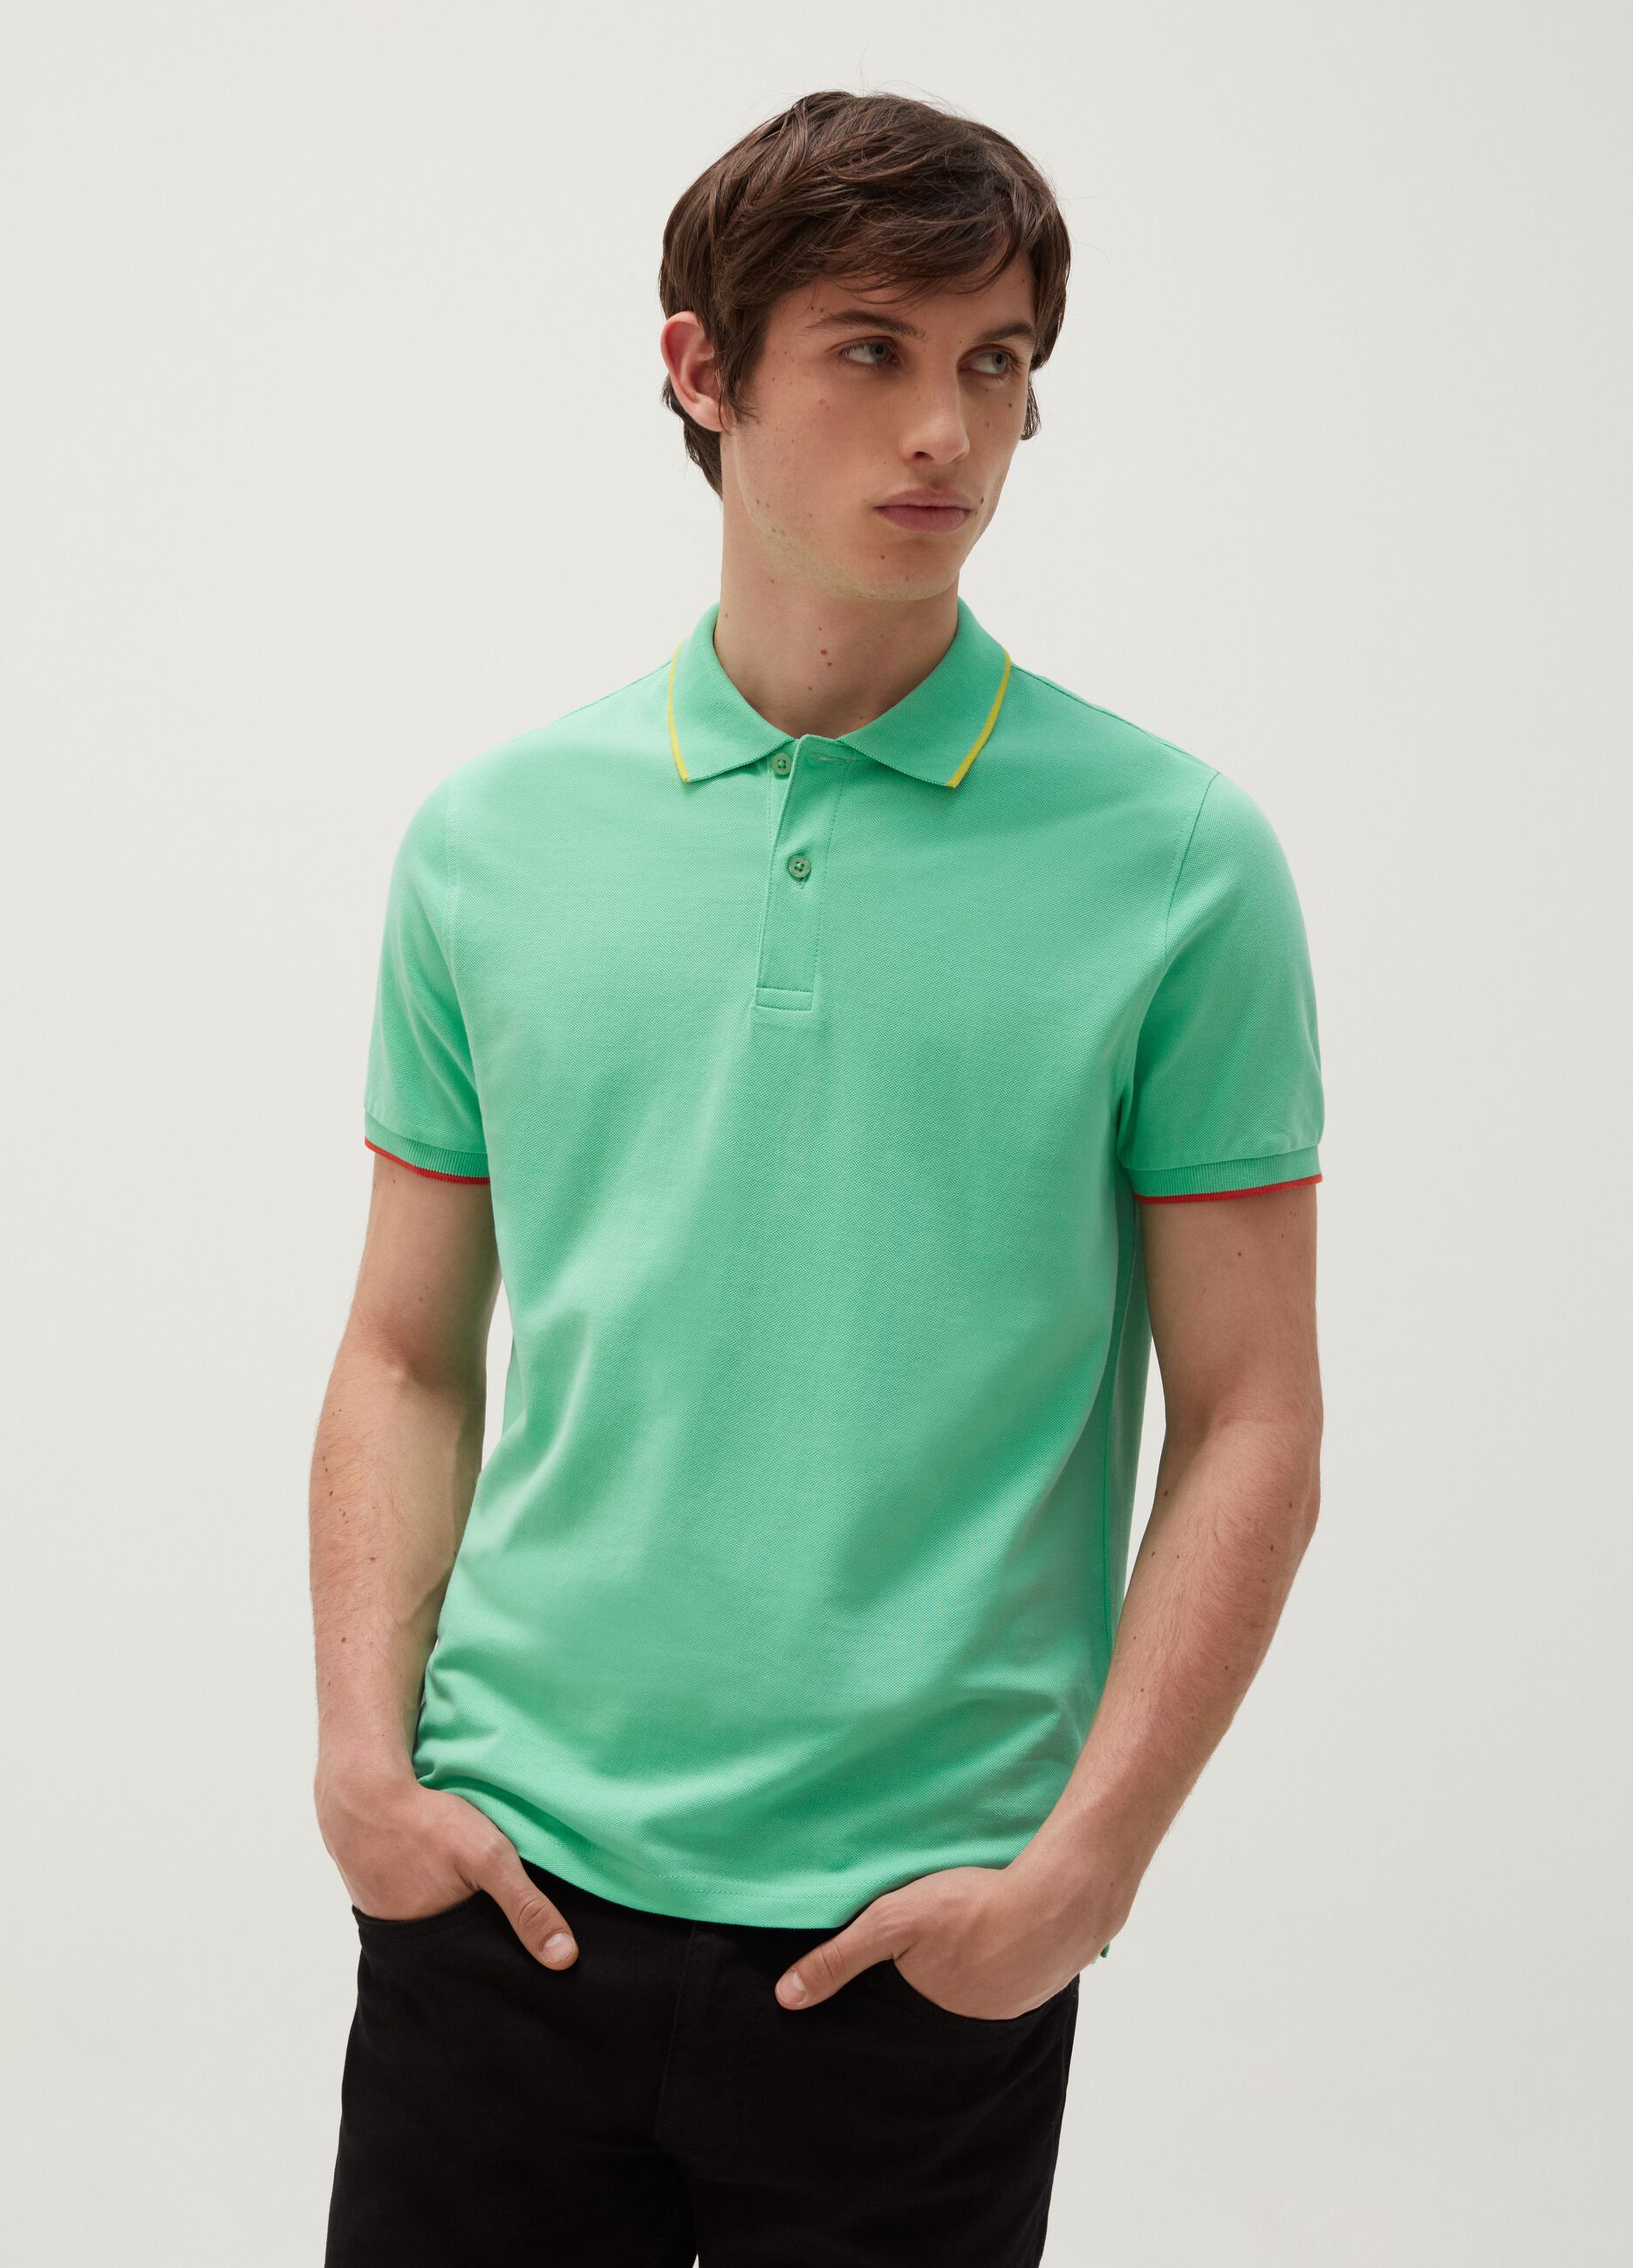 Cotton piquet polo shirt with contrasting trim